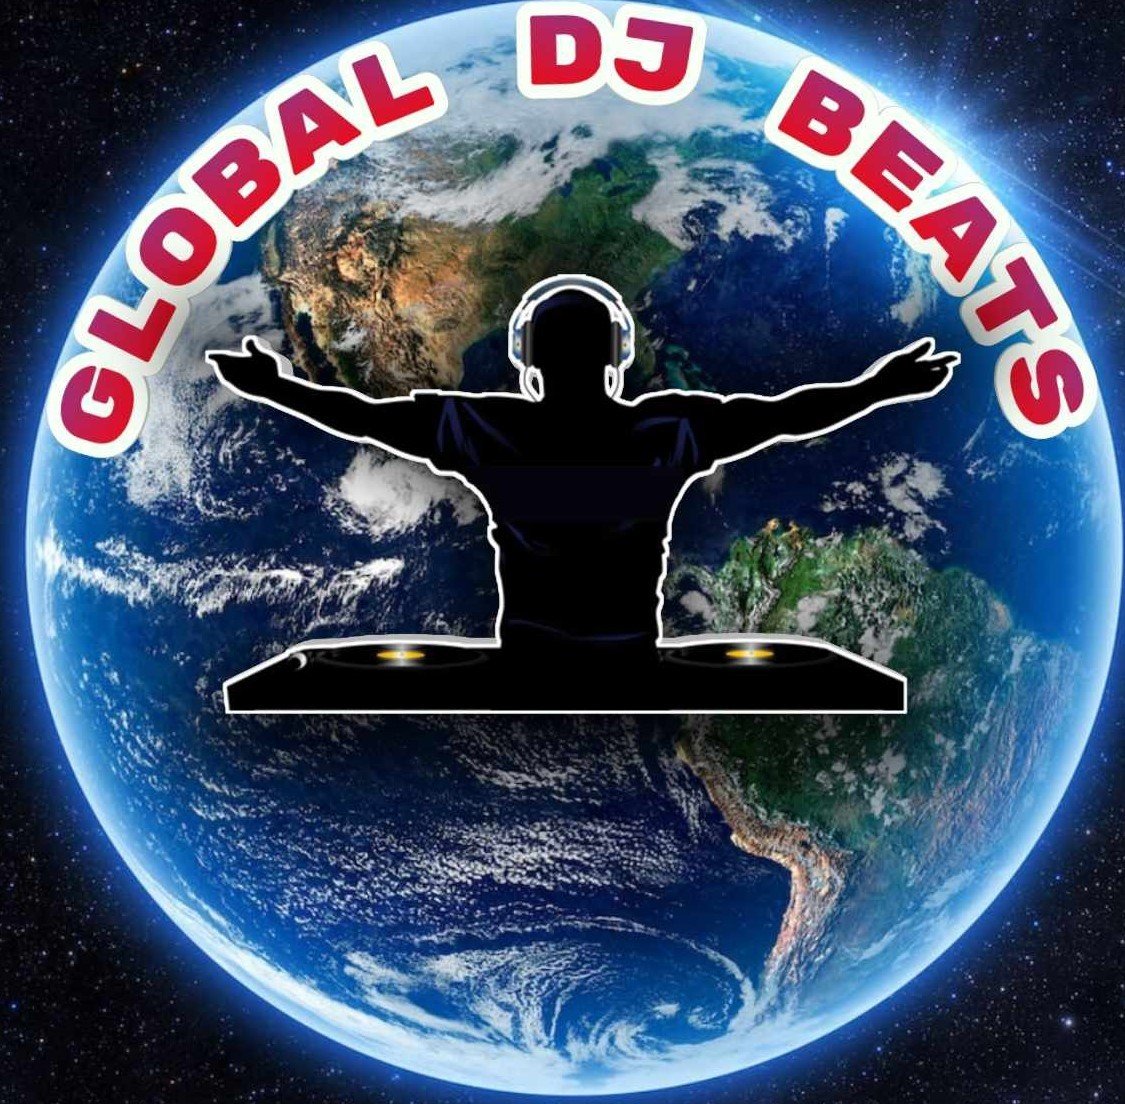 GLOBAL DJ BEATS -Raidtrain